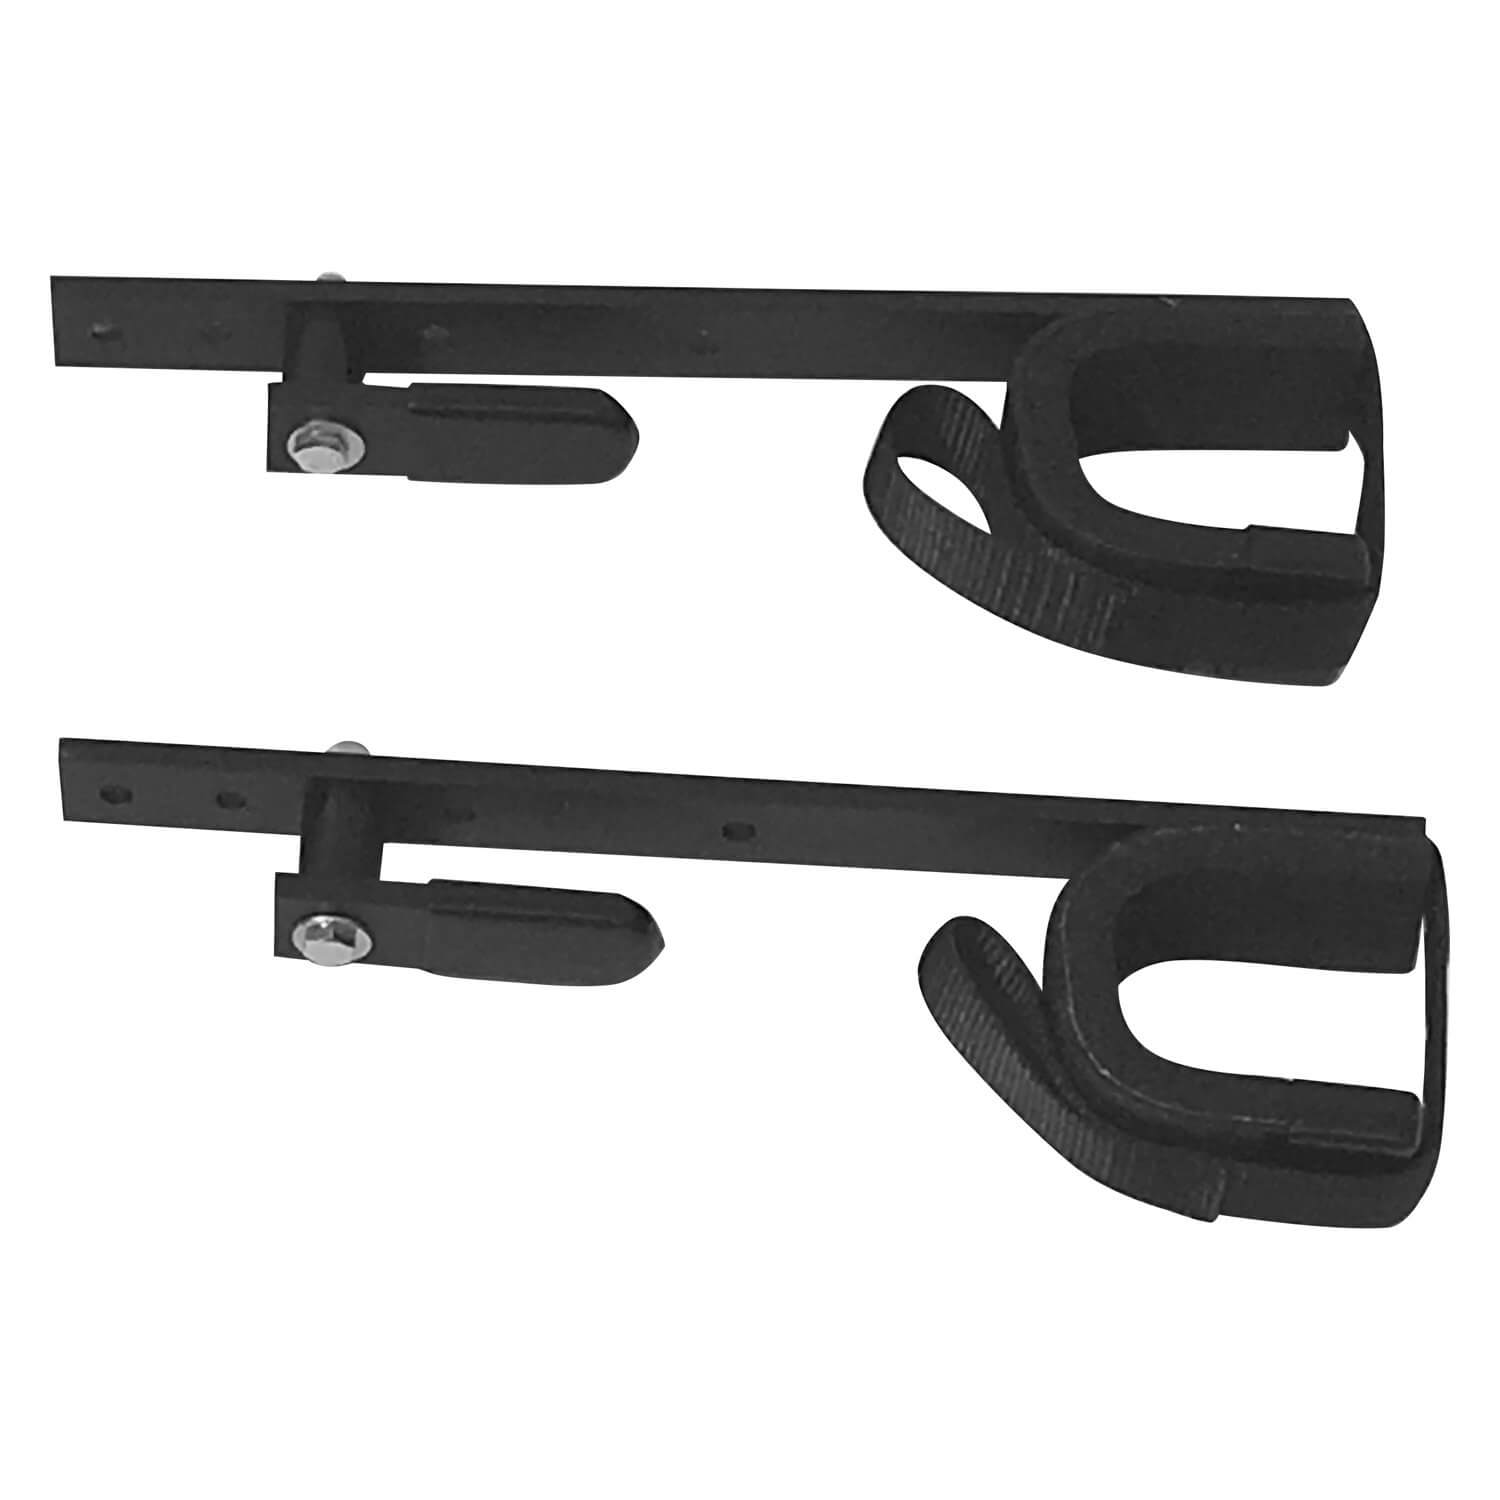 Bow Clips (1 set - holds 1 bow) - converts Overhead Gun Racks to Bow Racks, including Center-Loks